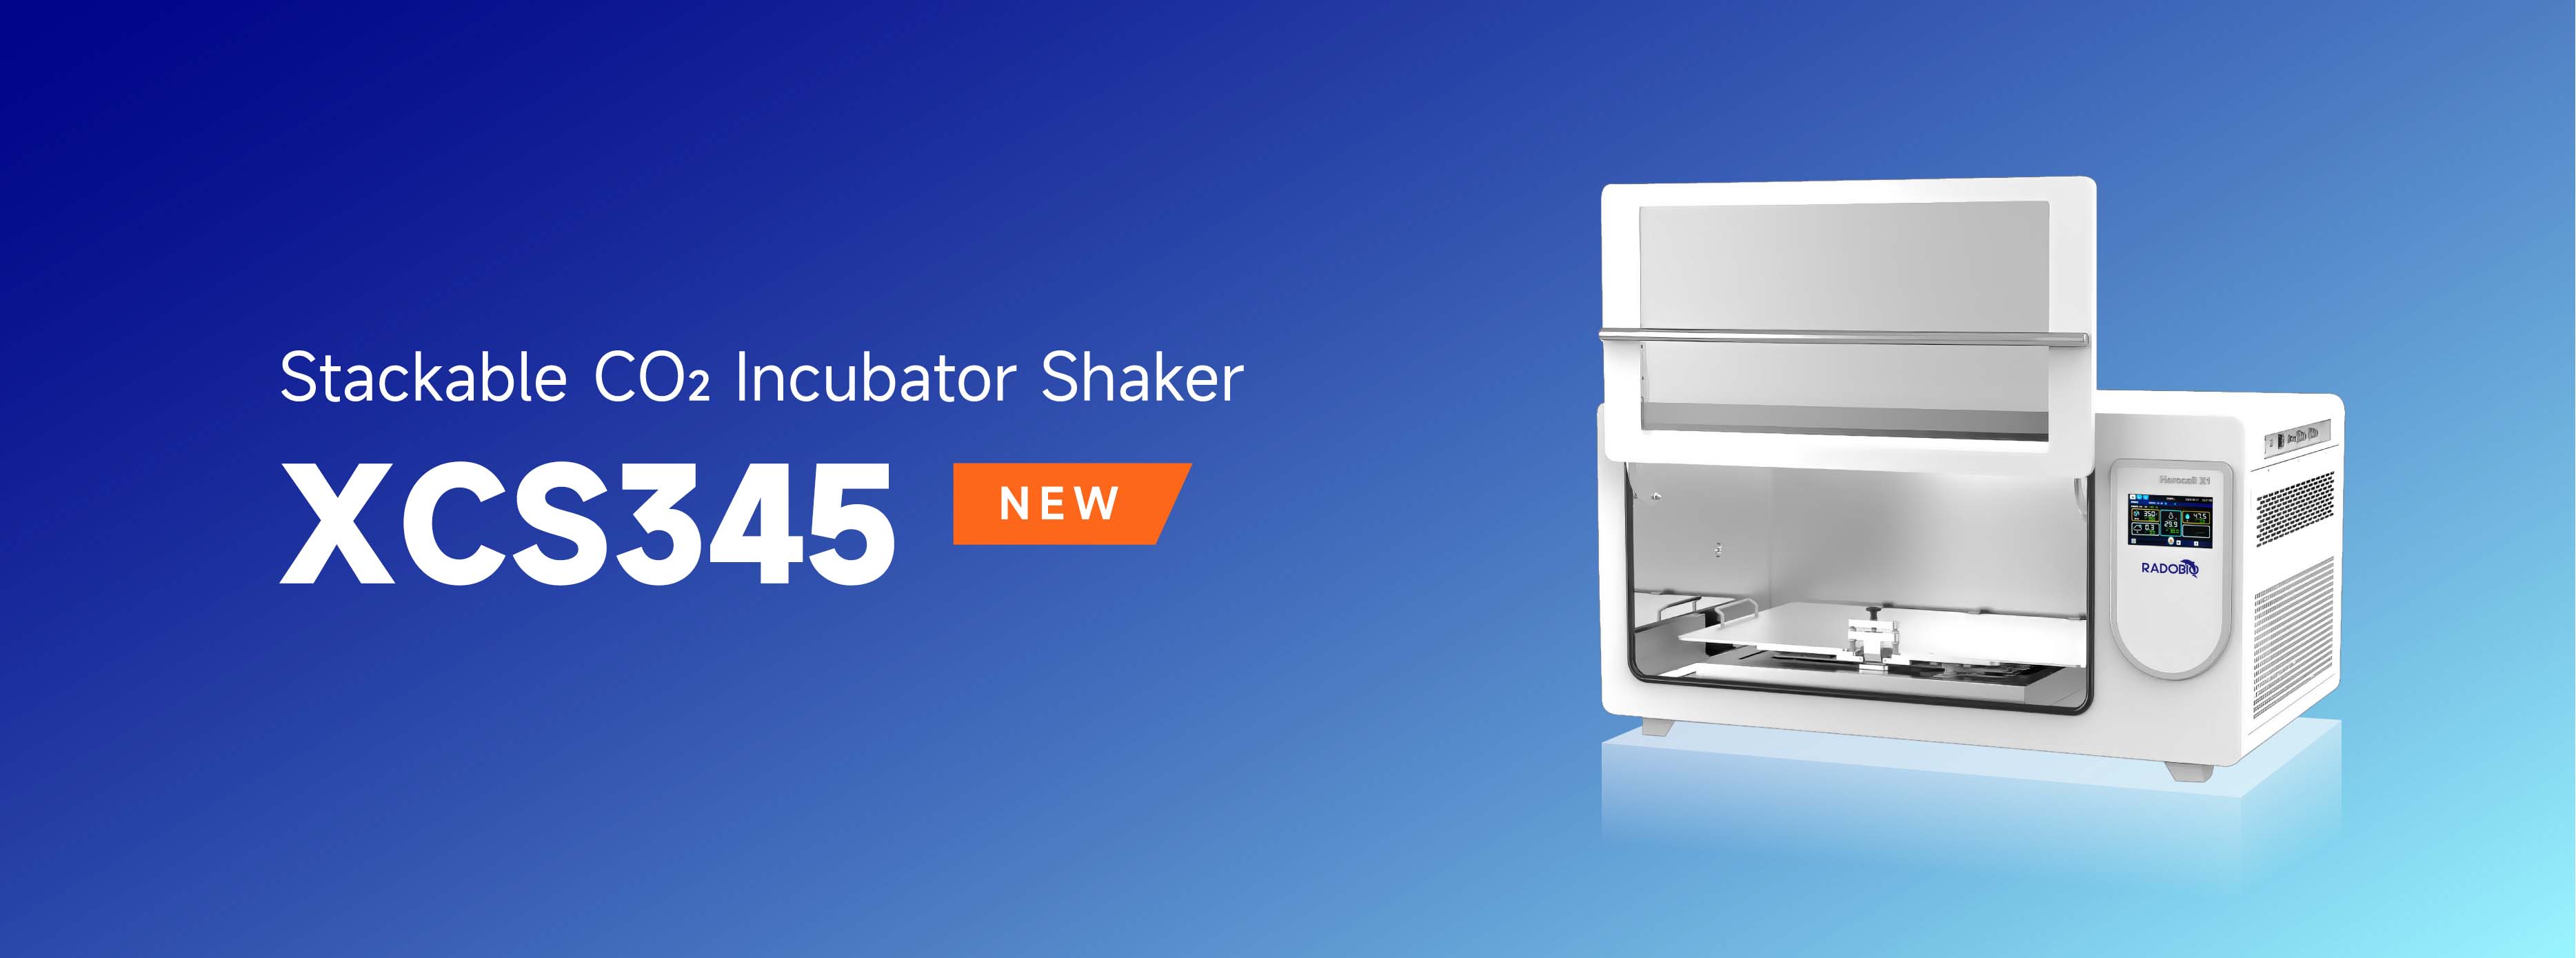 XCS345 co2 incubator shaker-banner